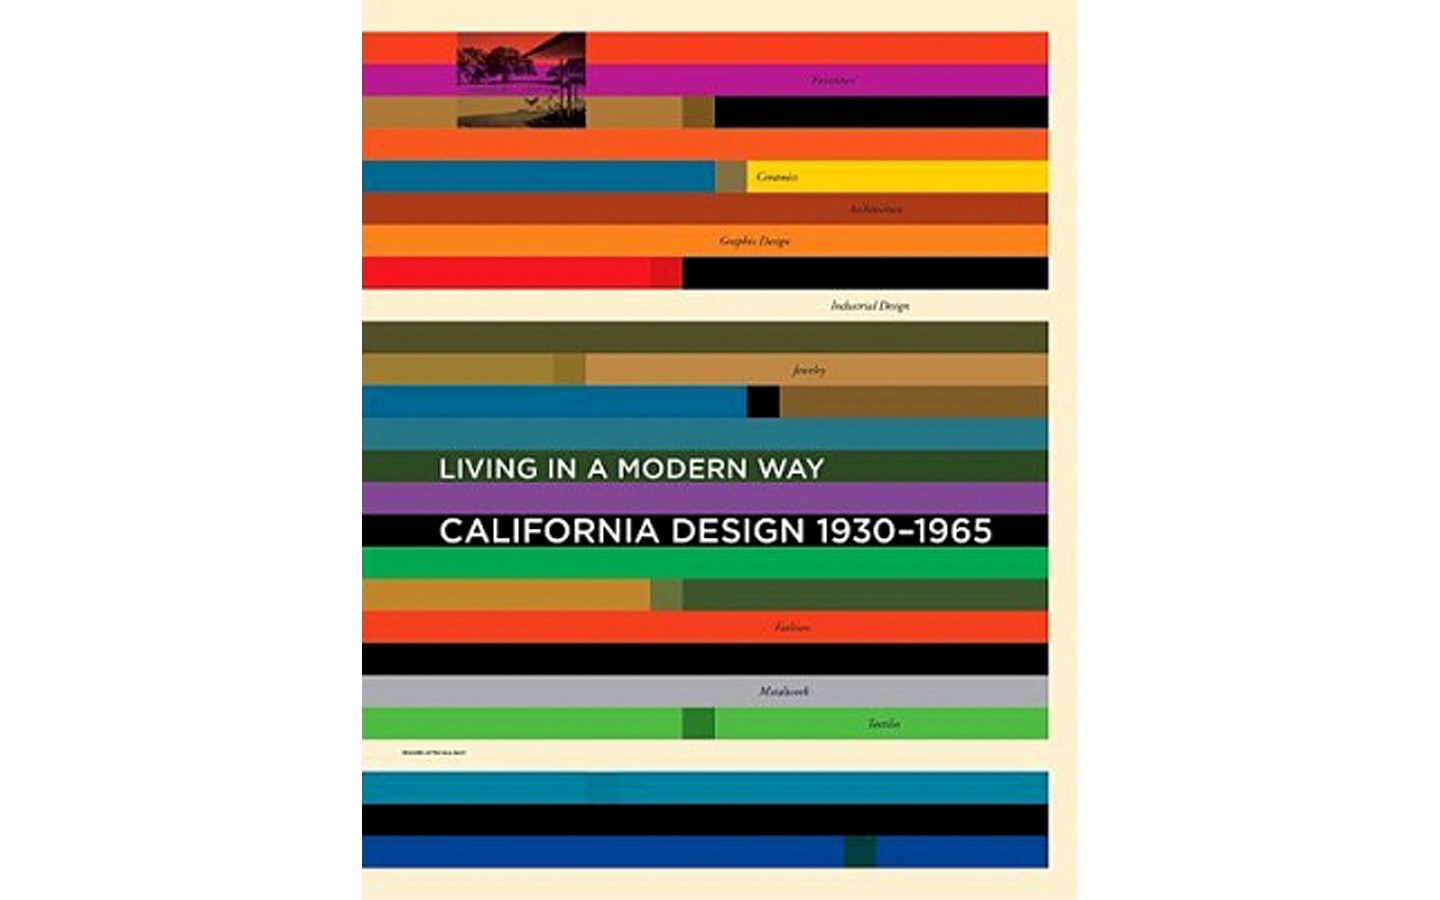 Living in a Modern Way: California Design 1930-1965 - EDITED BY WENDY KAPLAN - MIT PRESS